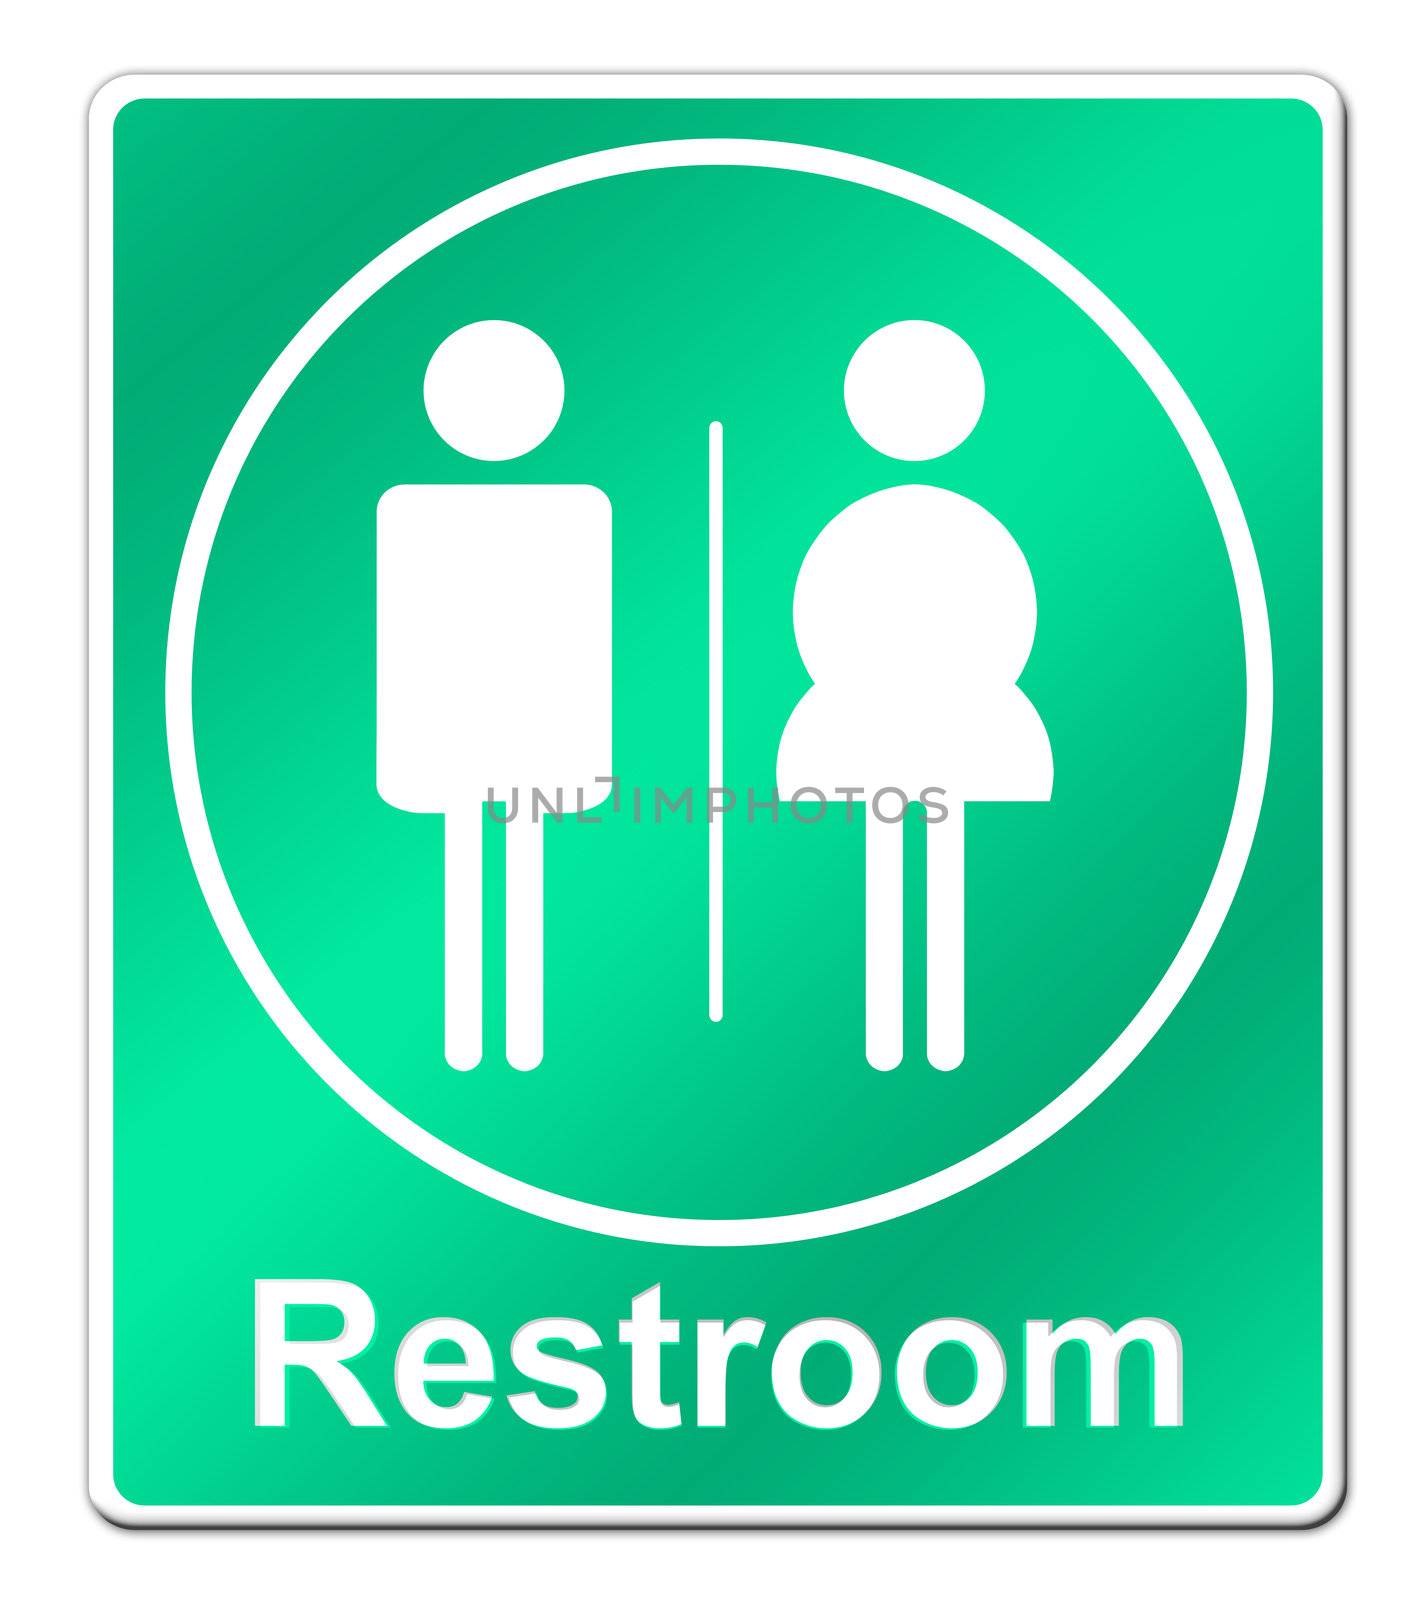 Restroom sign by geargodz